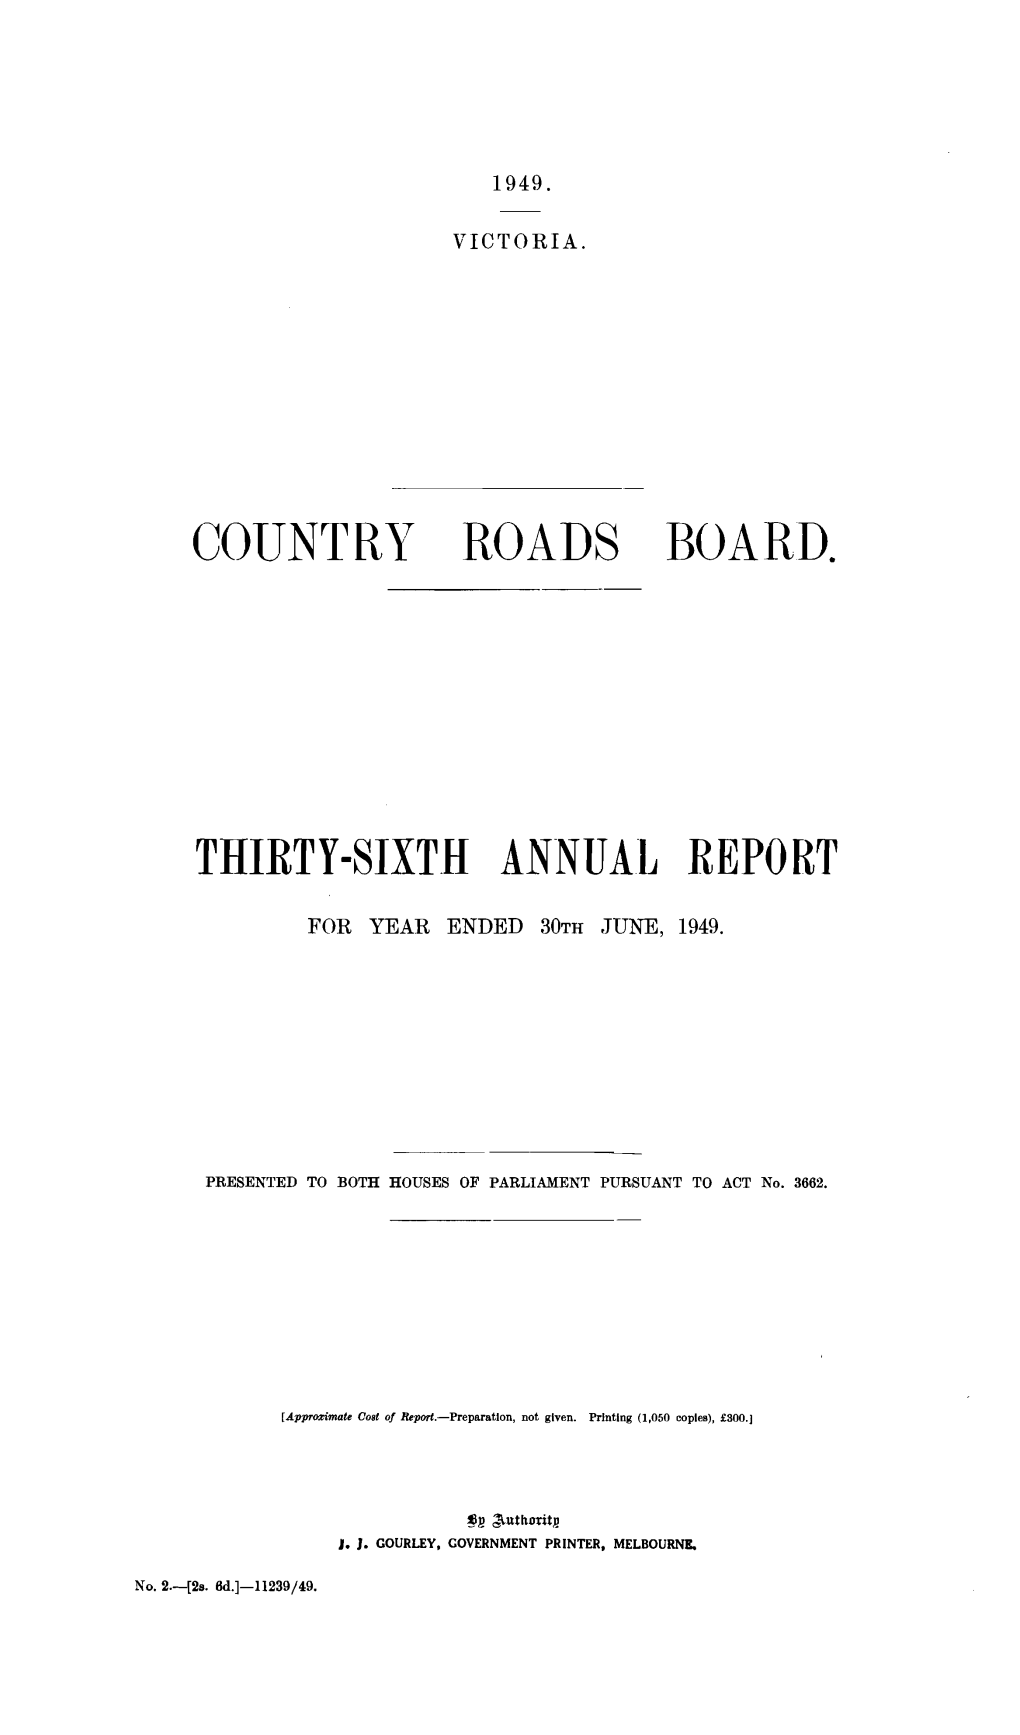 Country Roads Board